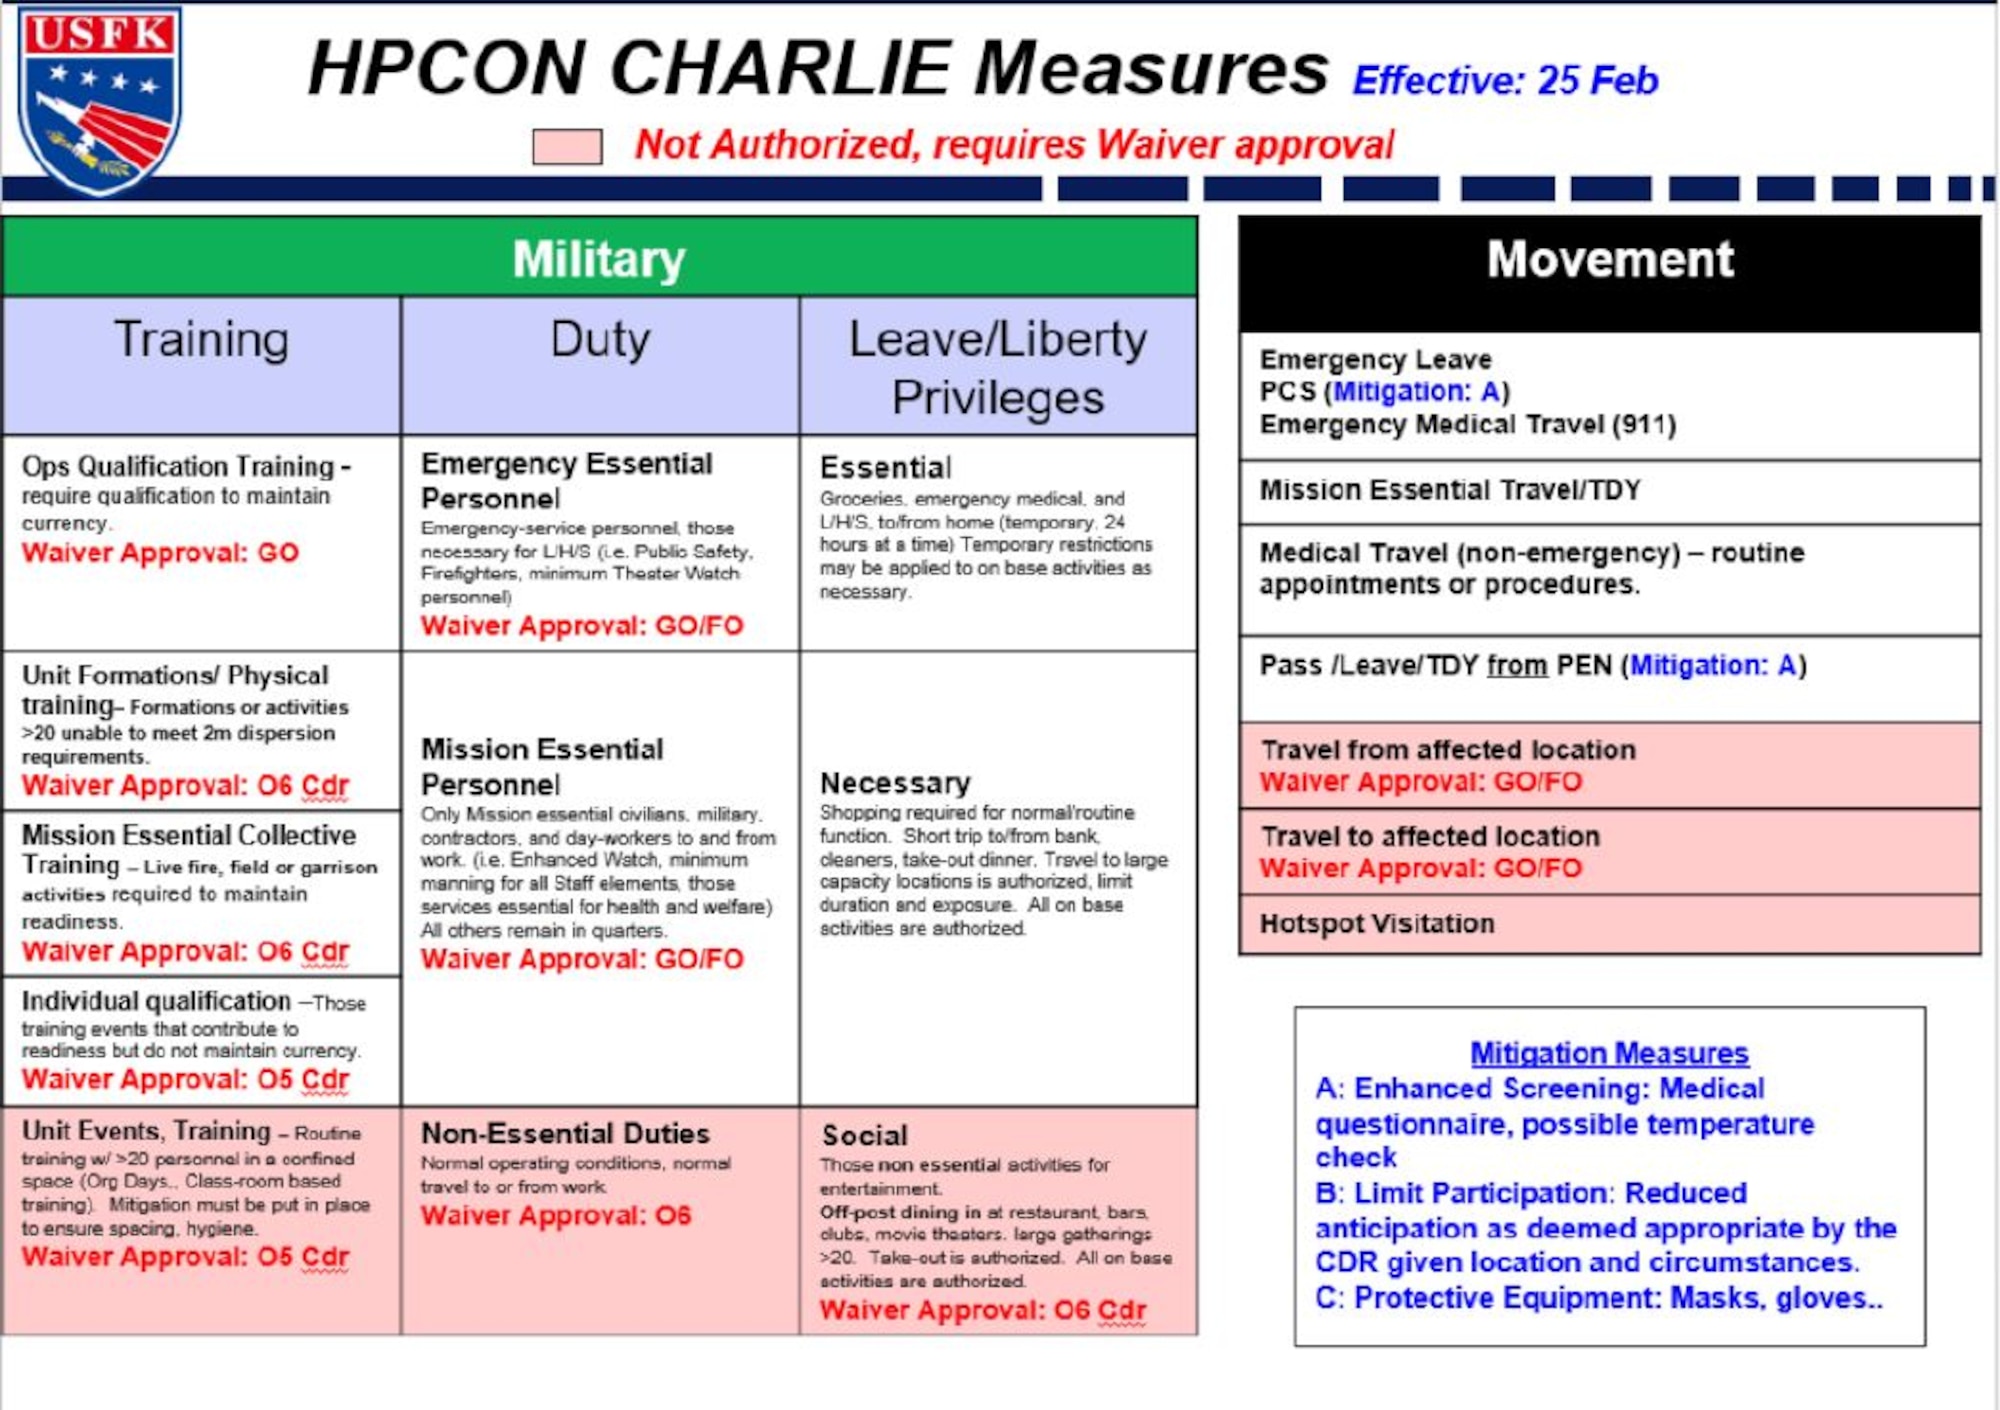 HPCON Charlie Measures